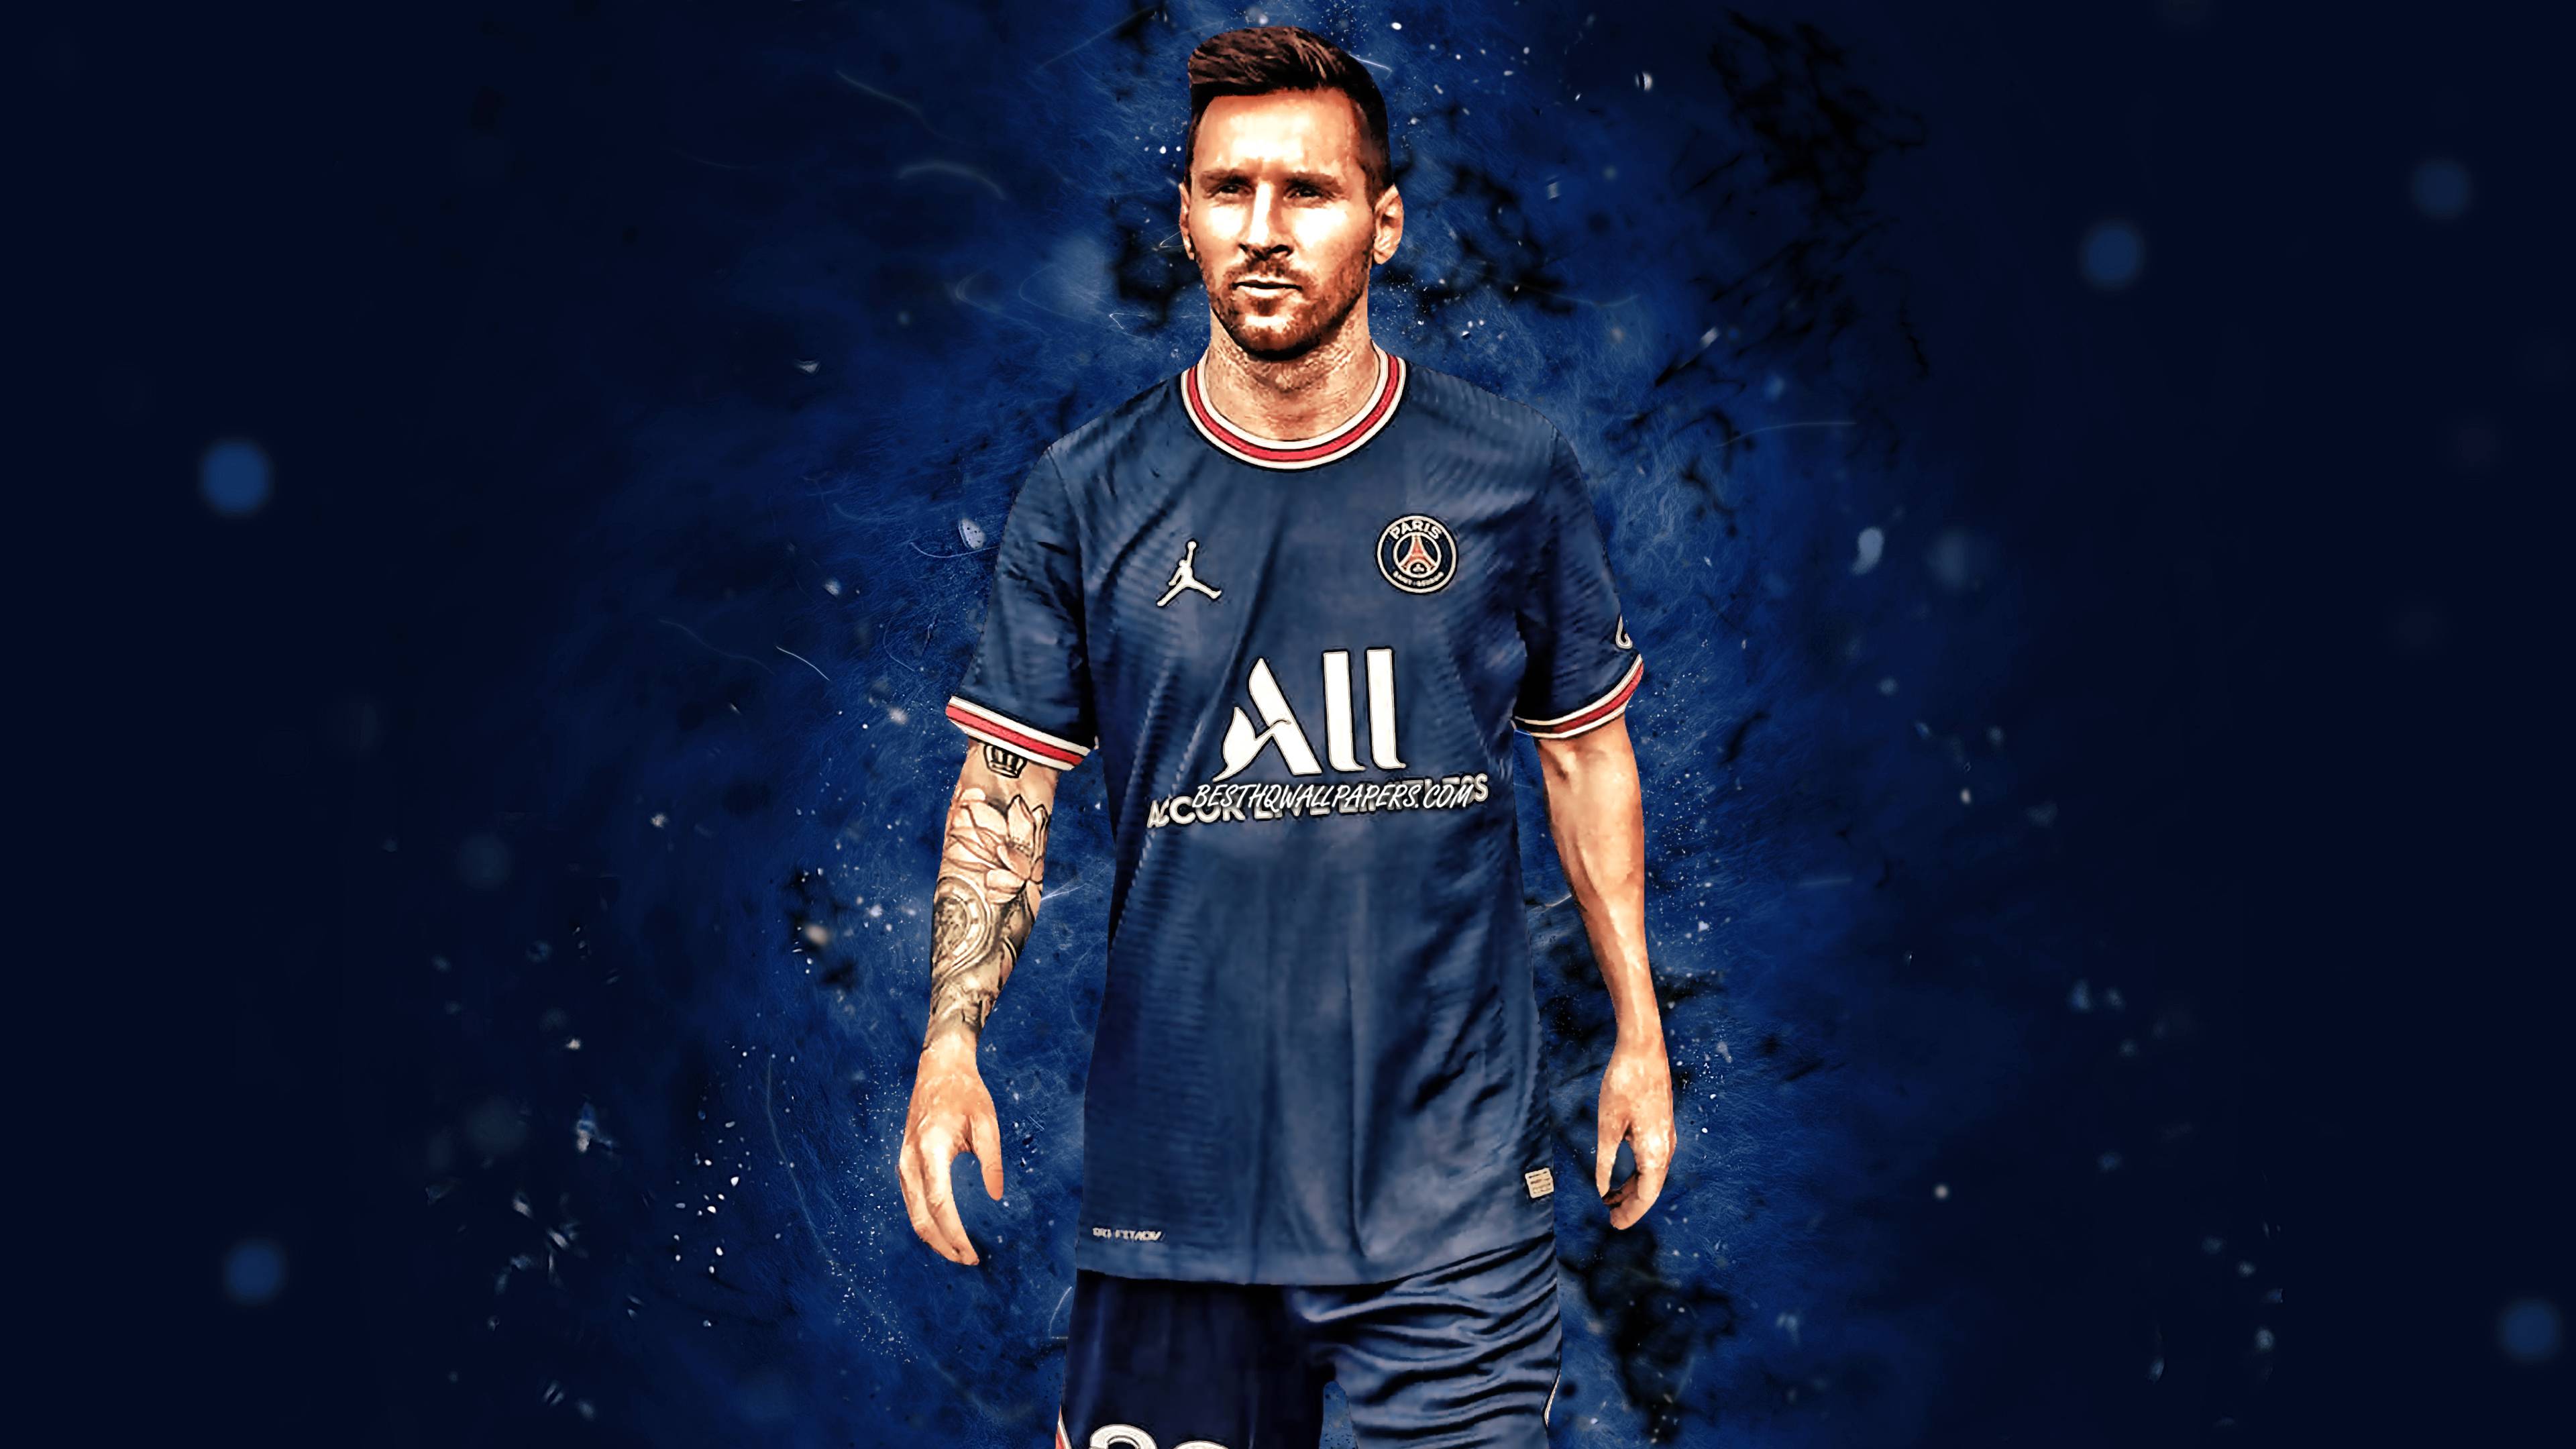 Messi Neymar Mbappe PSG Wallpaper Full HD Free Download